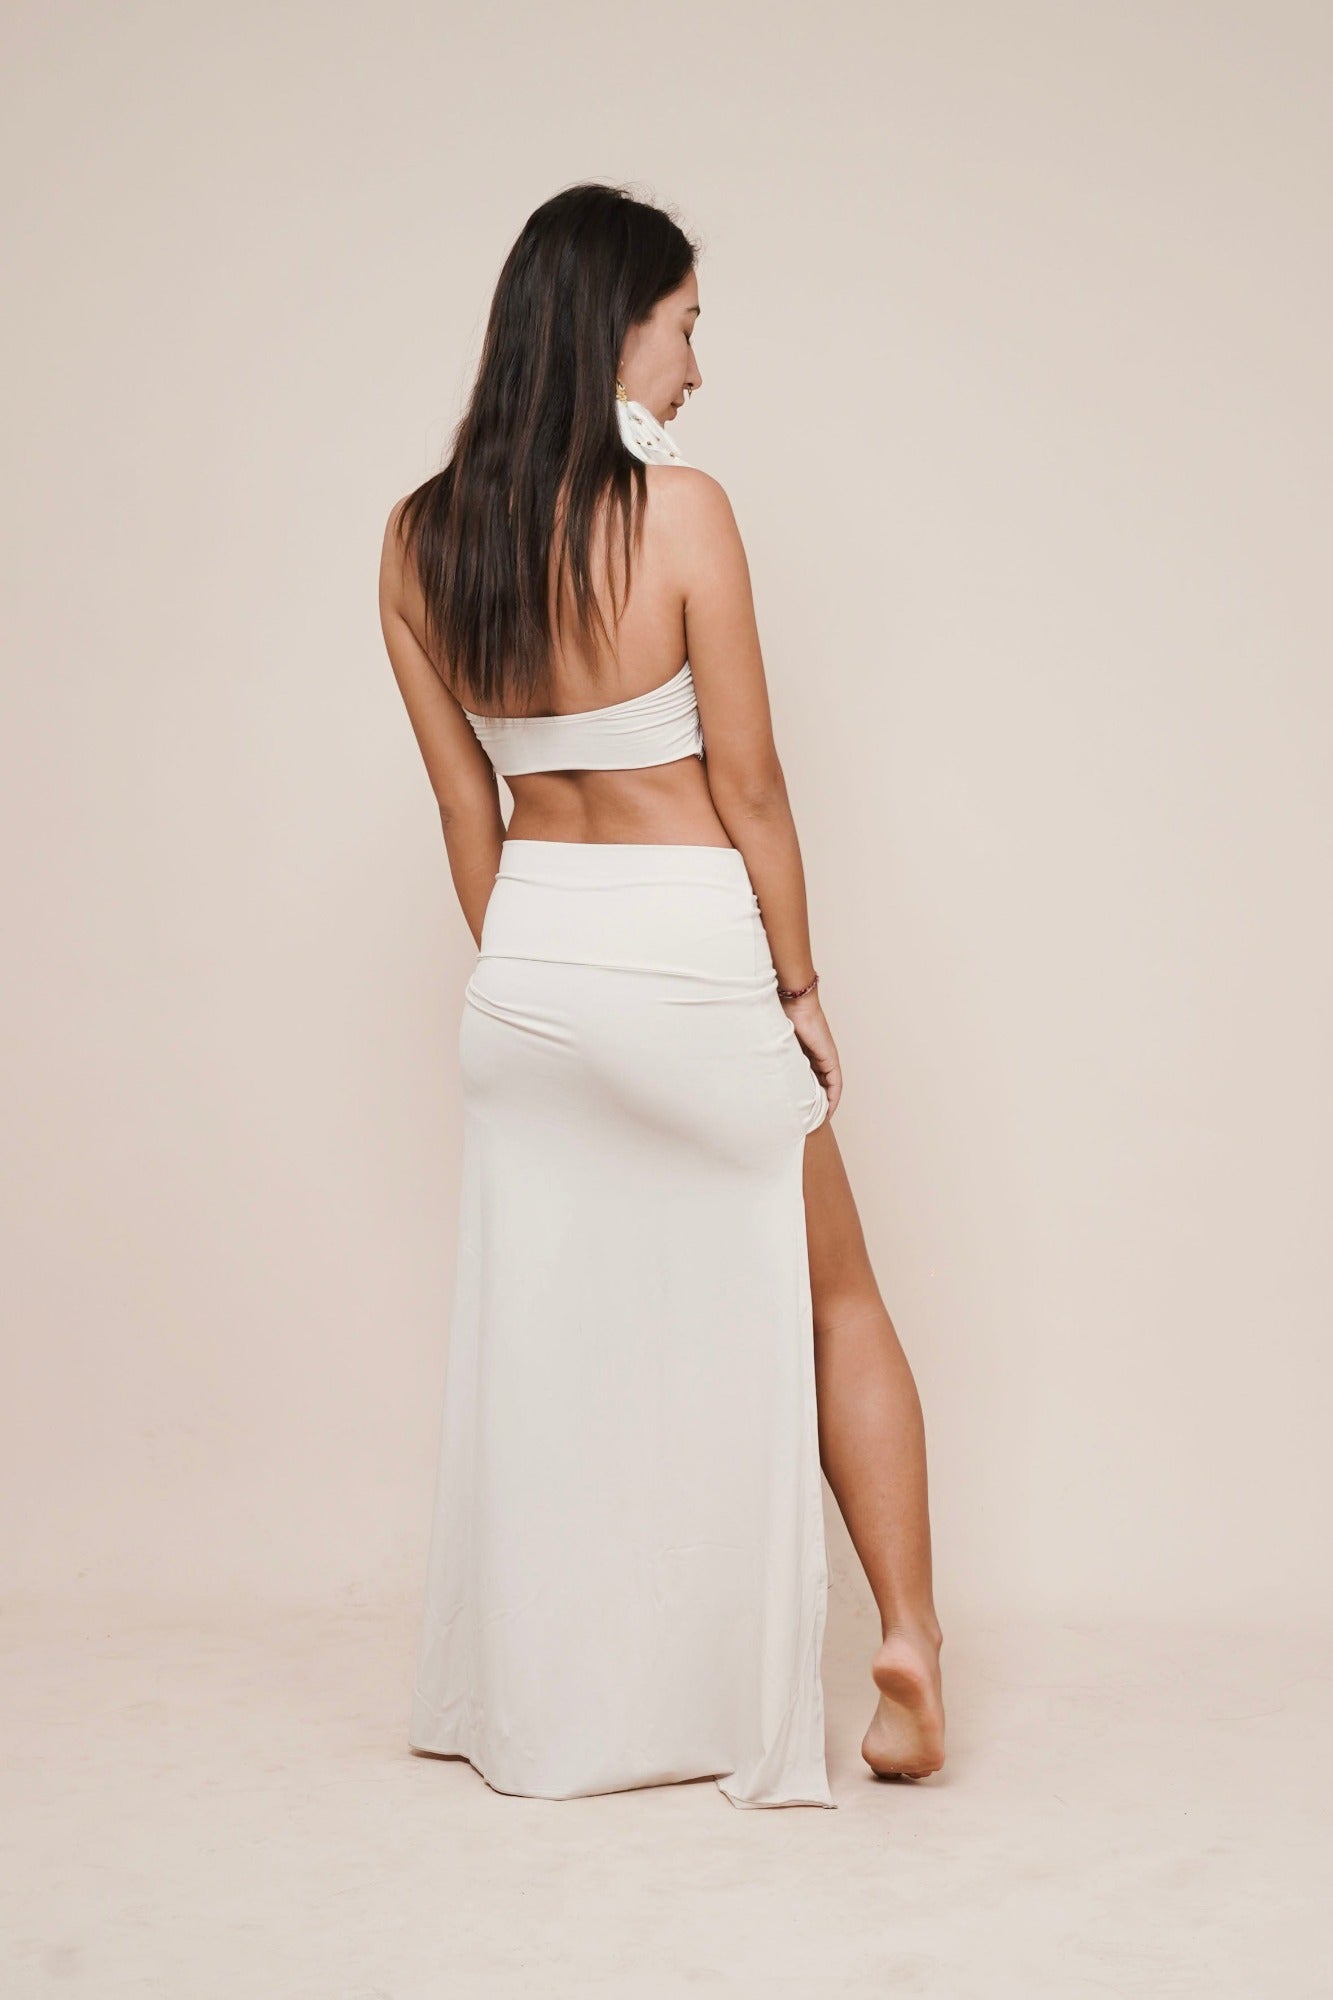 Elegance - Halter lace top & Harmony - Skirt by Bohemian Goddess I Color: Winter White I www.bohemiangoddess.com